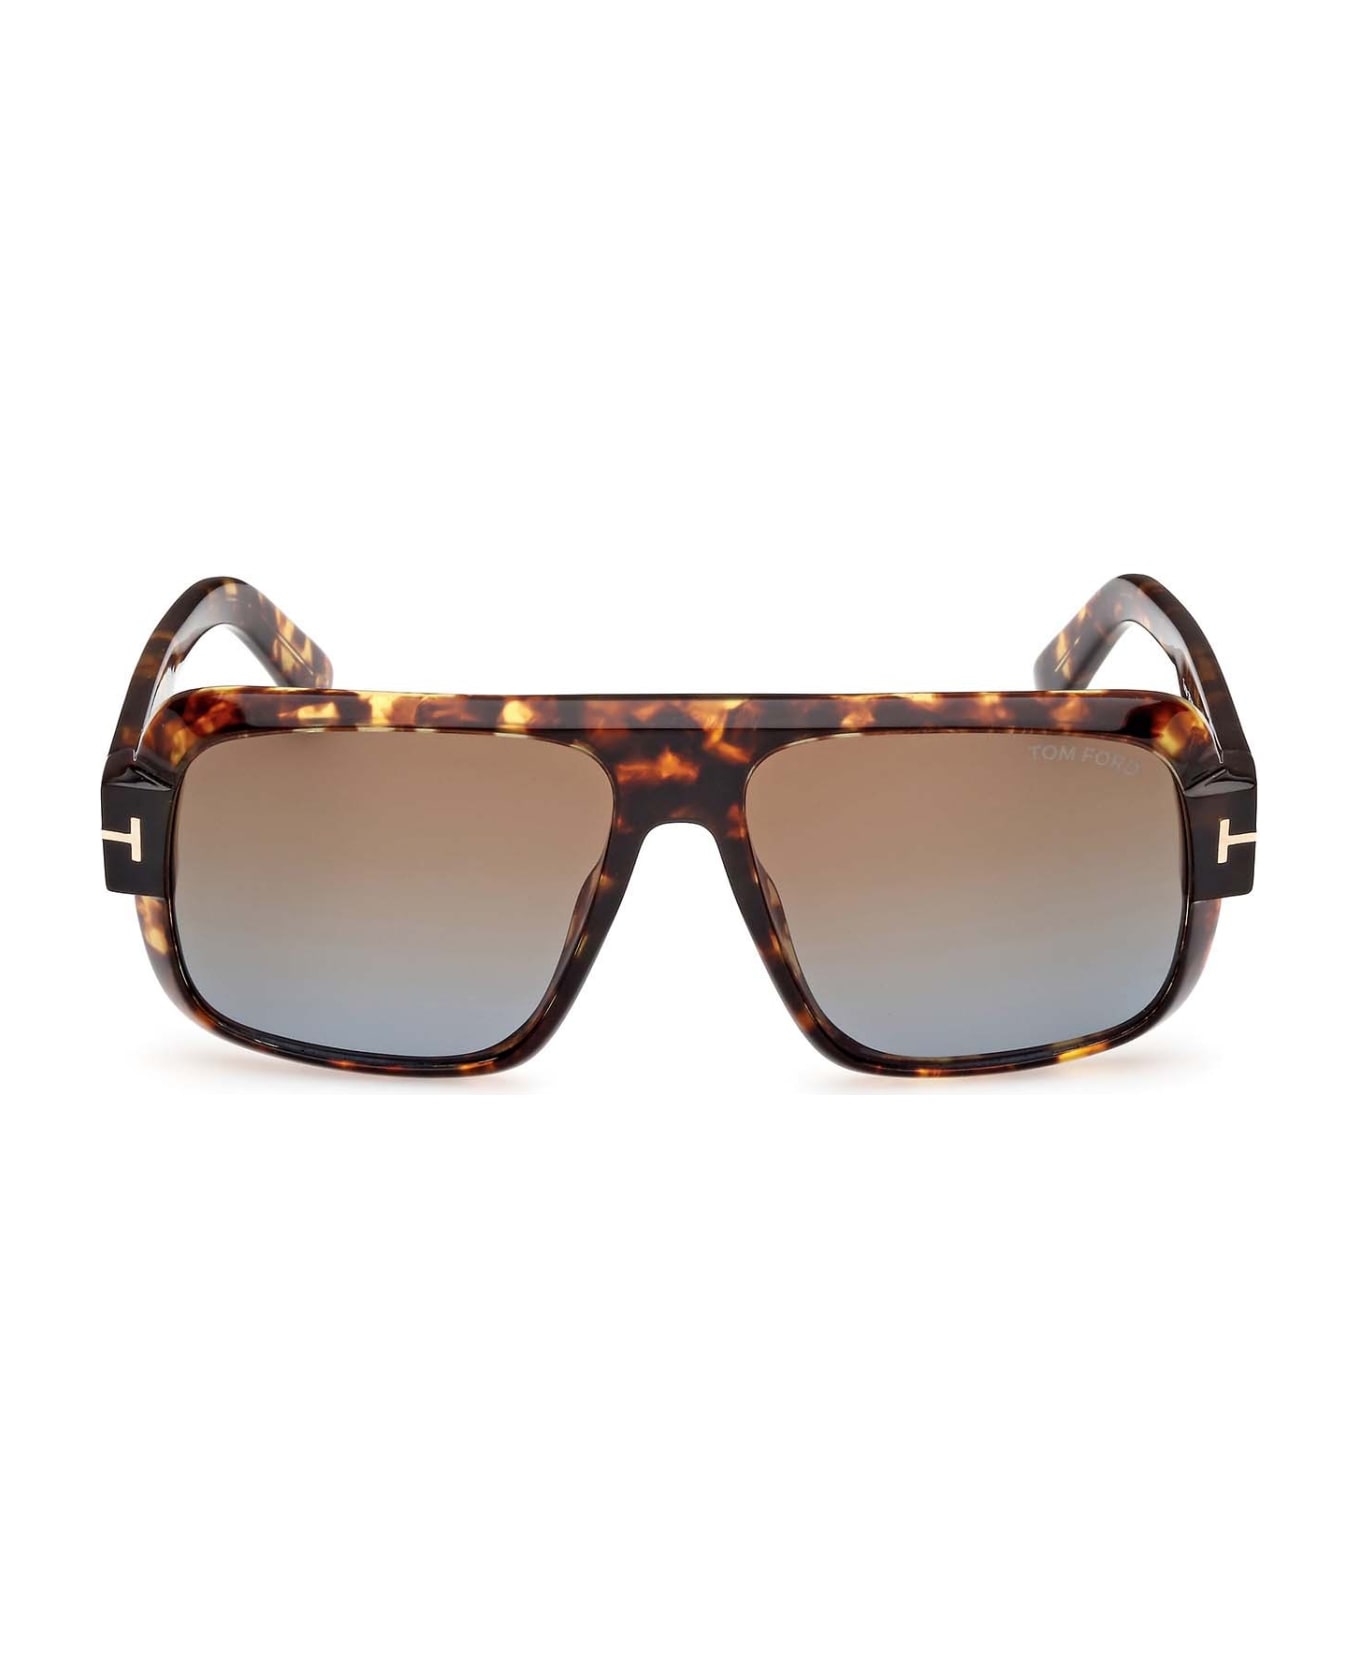 Tom Ford Eyewear Sunglasses - Multicolor/Marrone